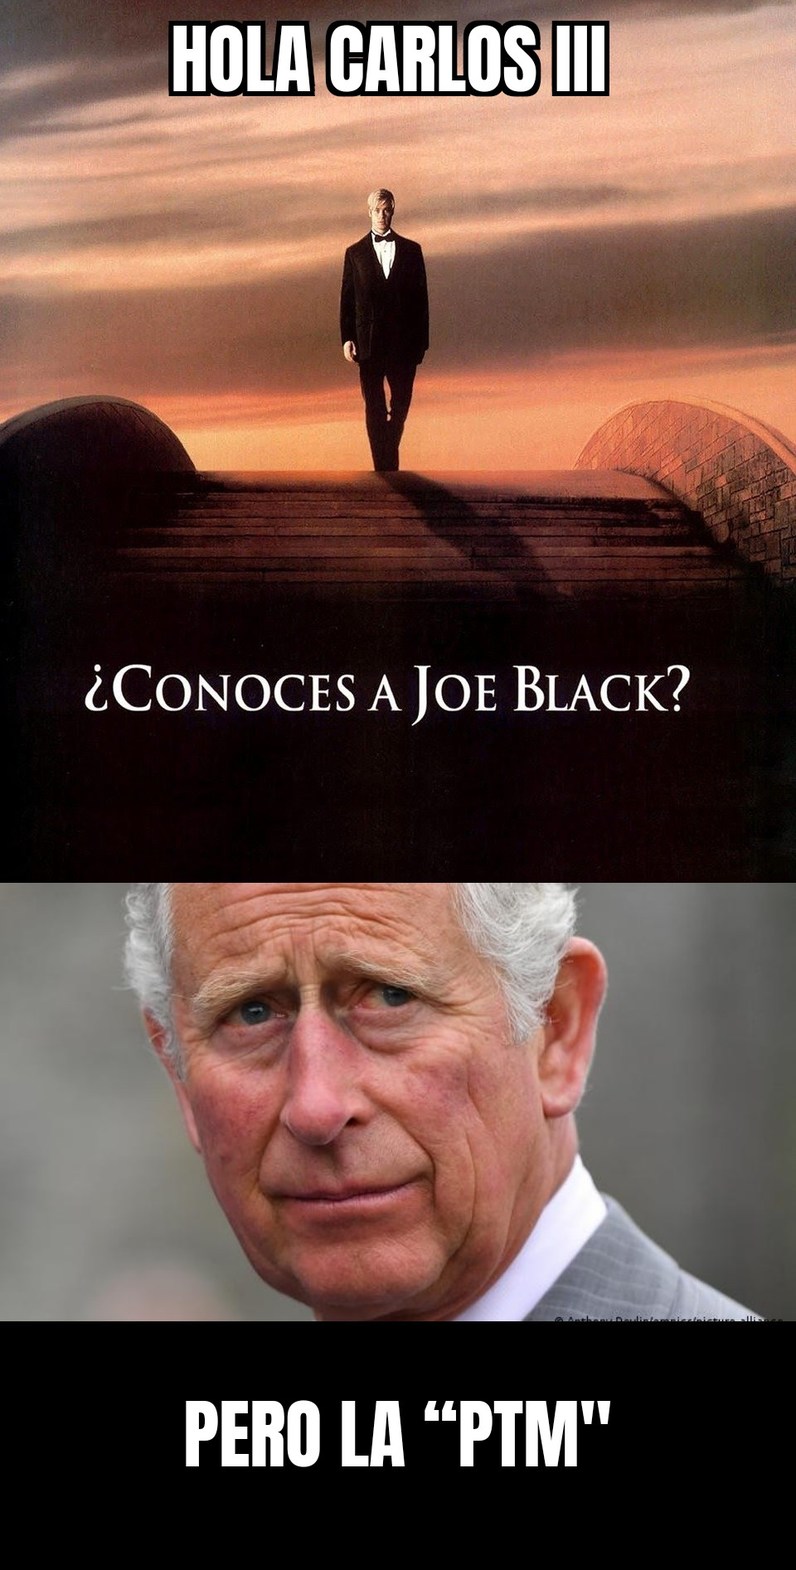 Rey Carlos III conoce a Joe Black - meme